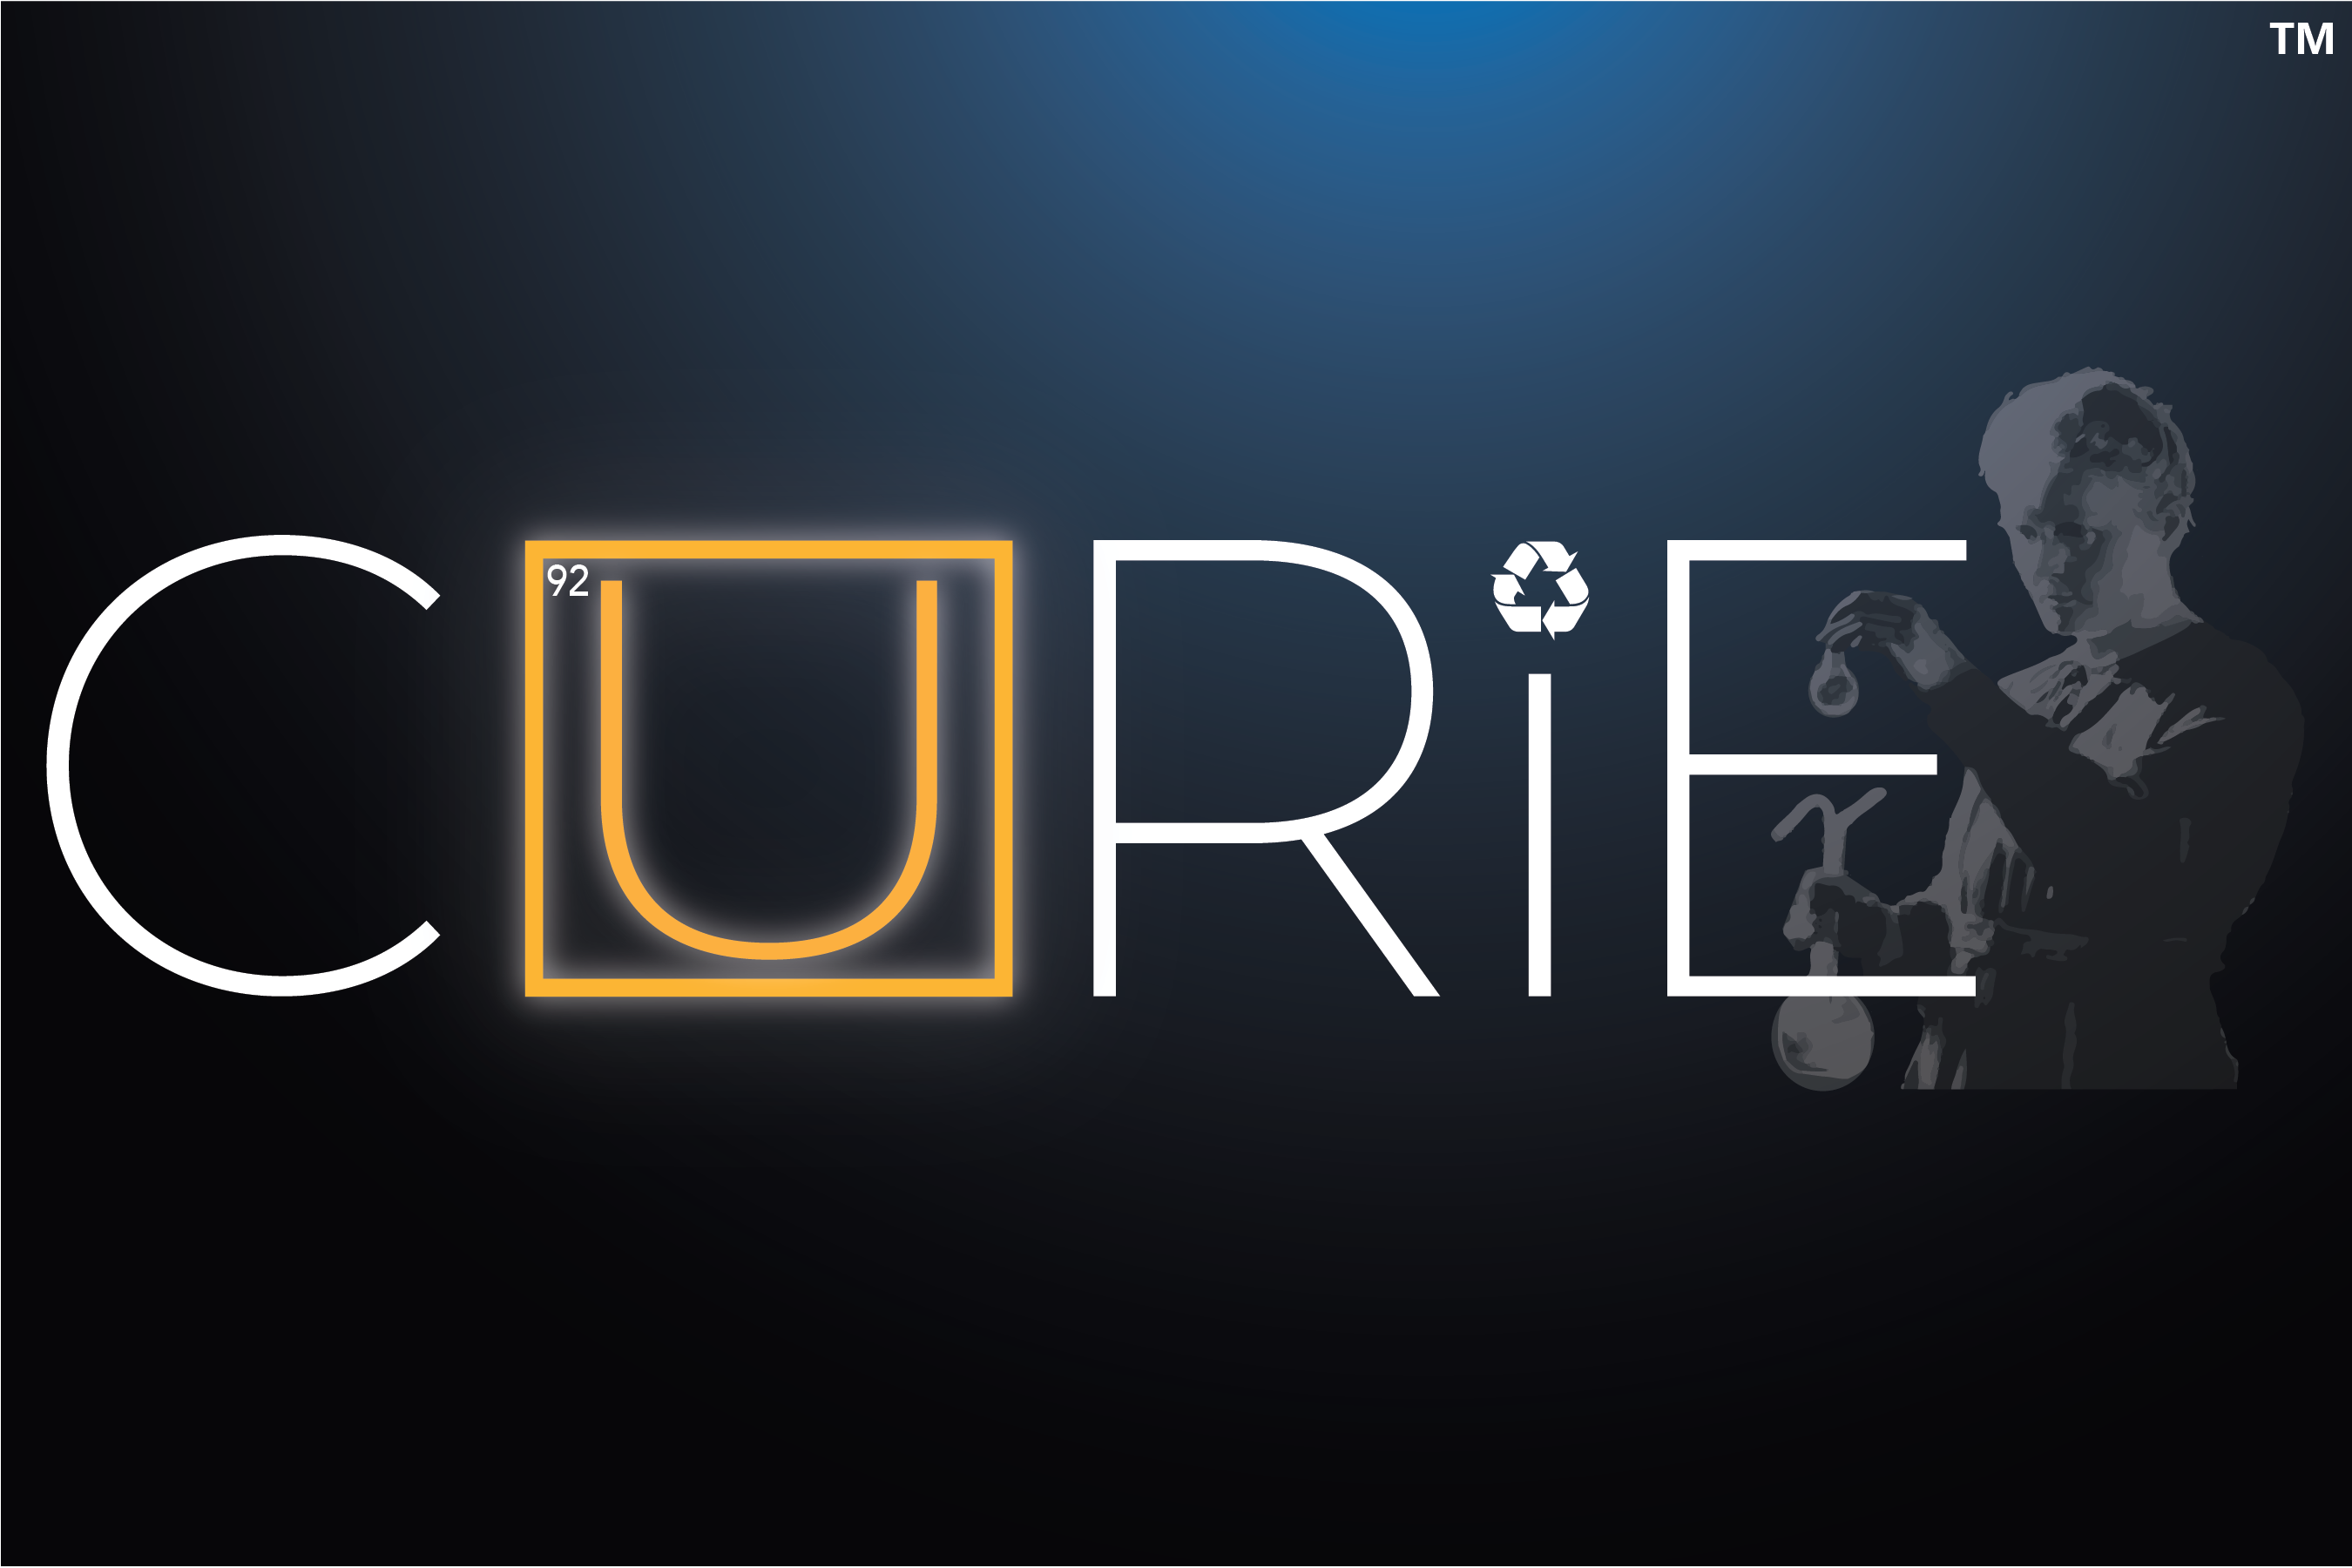 ARPA-E CURIE Program Graphic